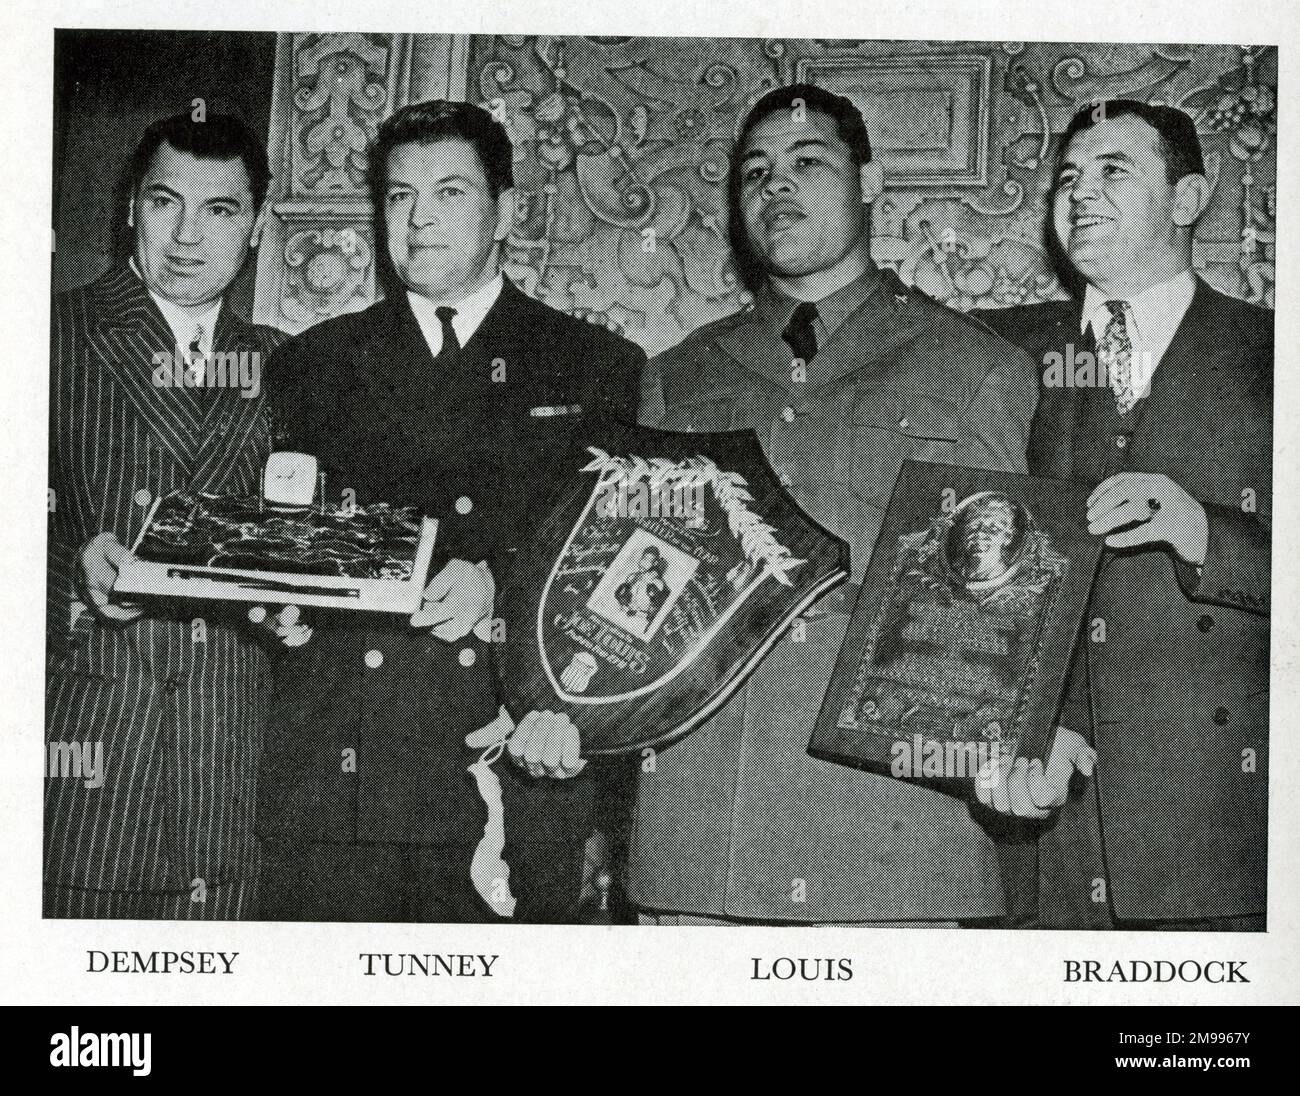 Four world boxing champions (left to right): Jack Dempsey, Gene, Tunney, Joe Louis, James J Braddock. Stock Photo